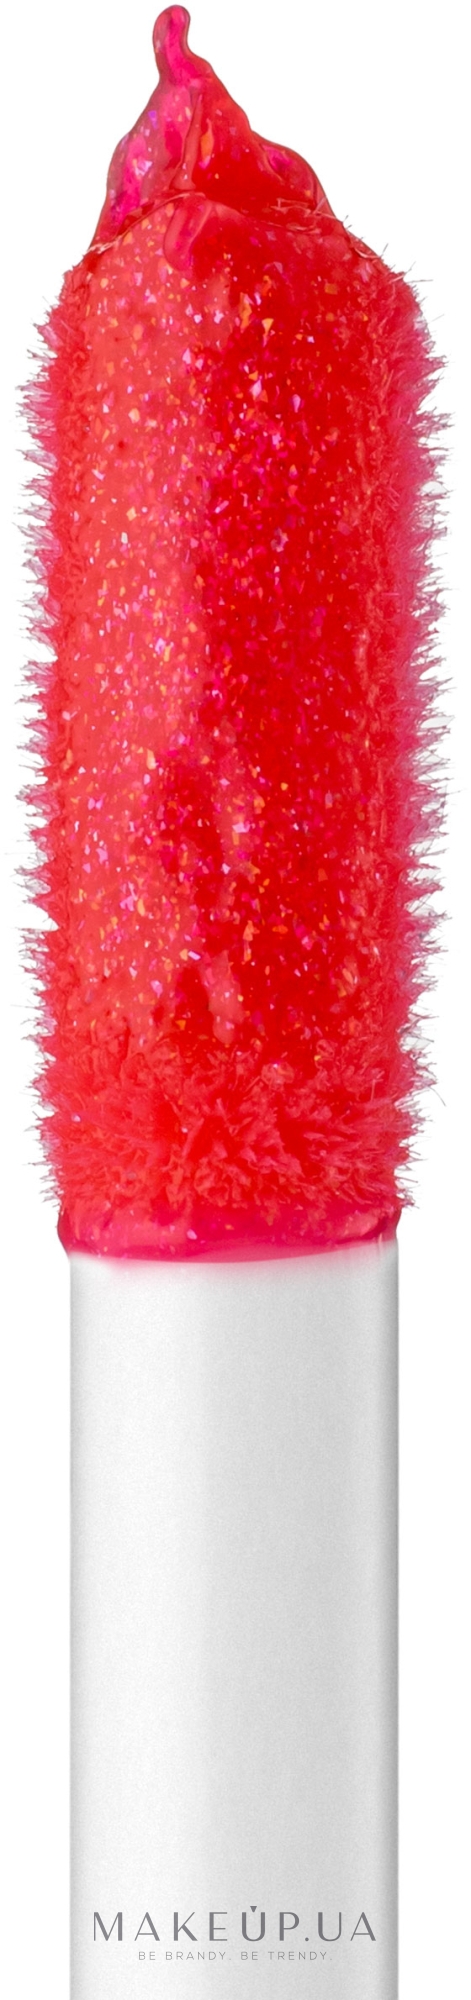 Блеск для губ с эффектом глазури - Pupa Glossy Lips (тестер без коробки) — фото 402 - Coral Constellation